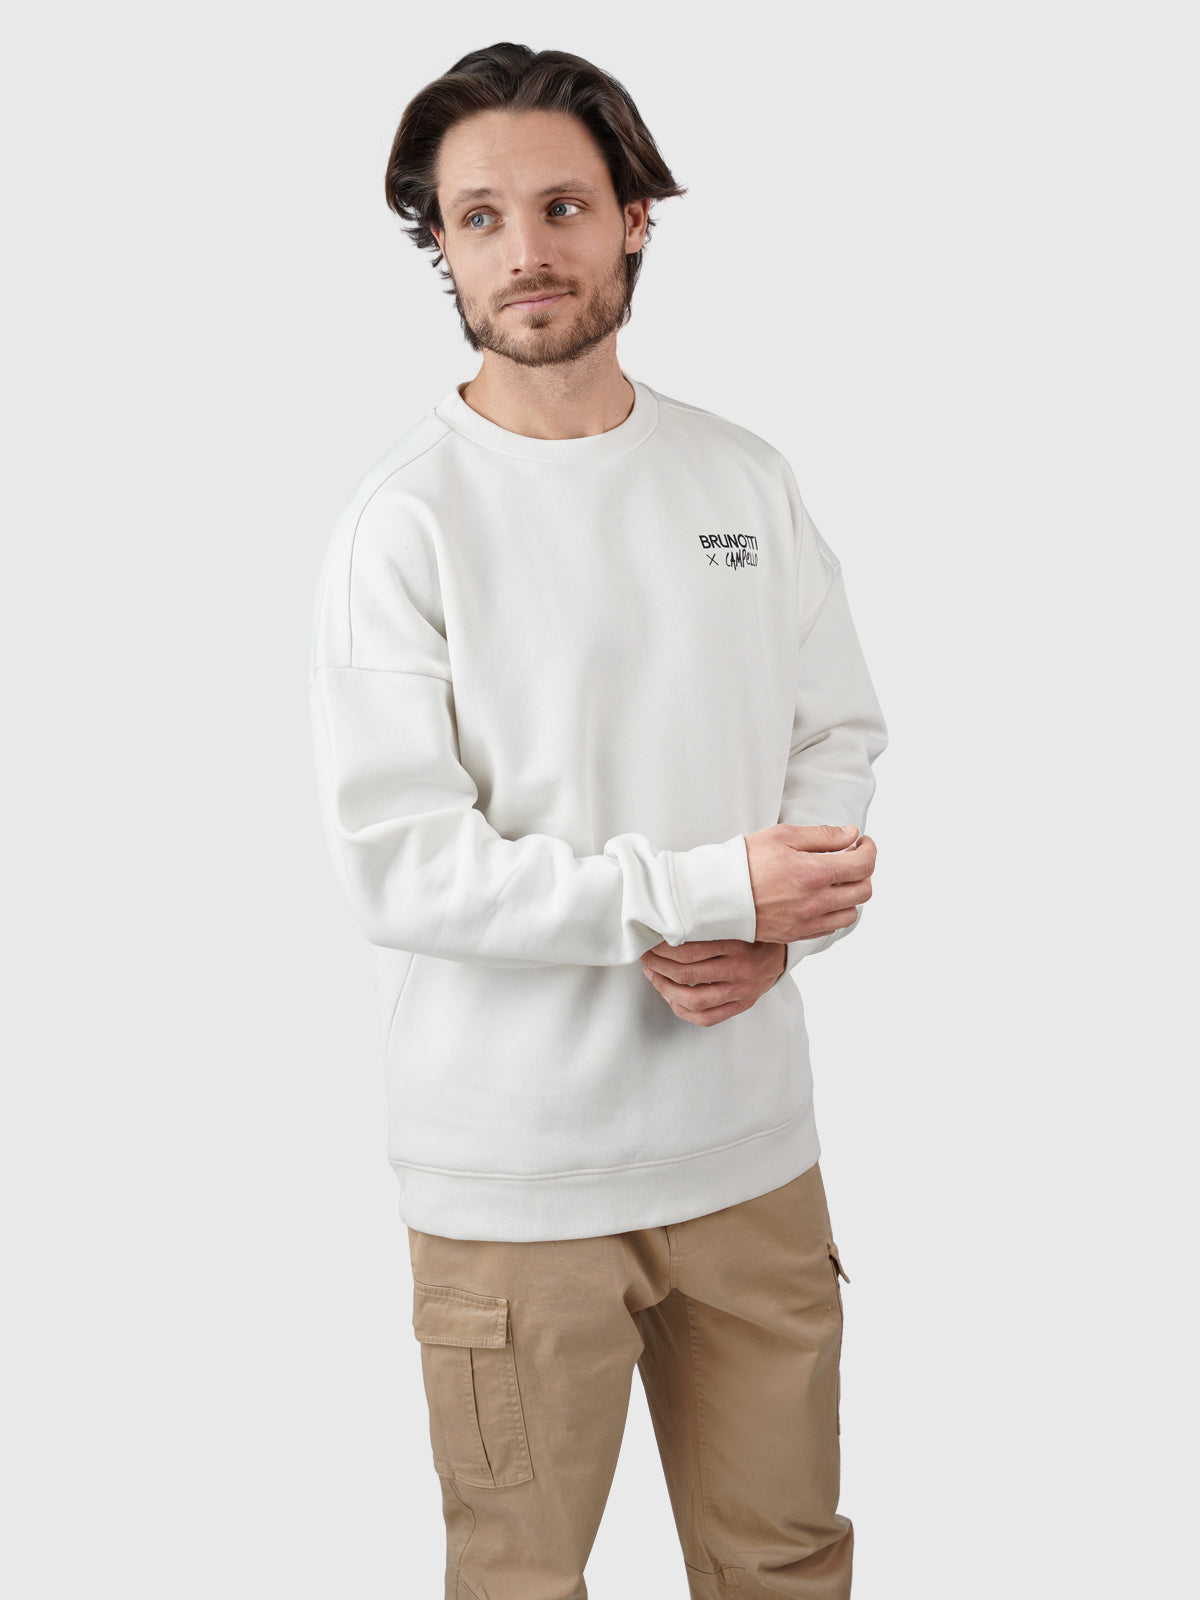 Campello-Island Herren Oversized Sweatshirt | Off-White